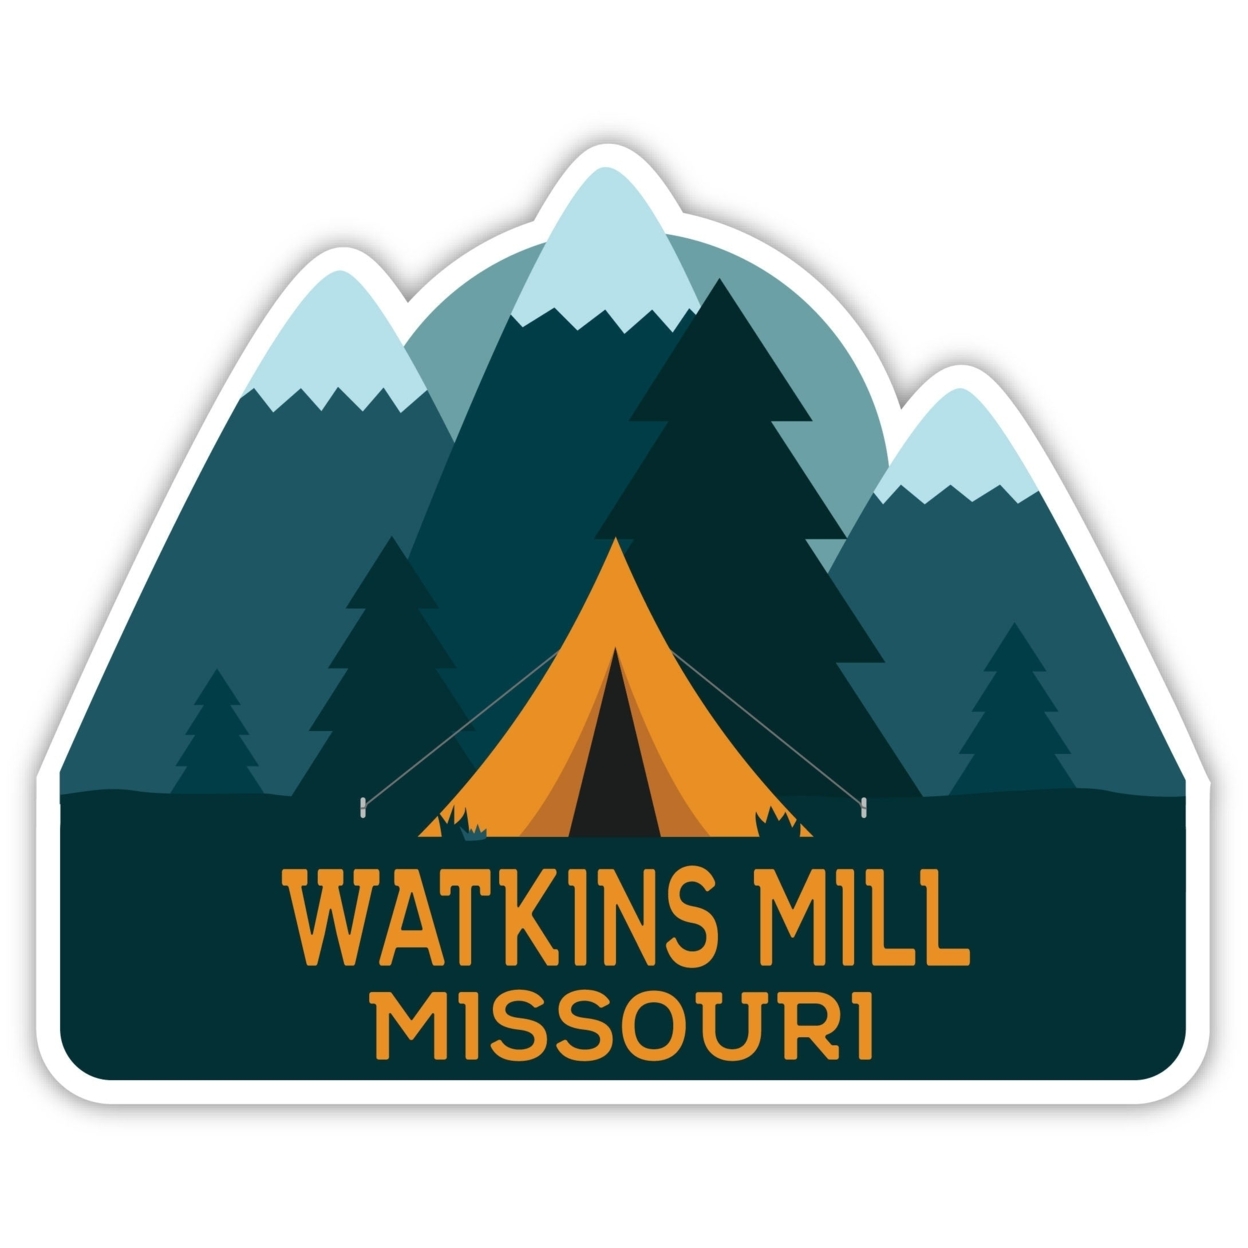 Watkins Mill Missouri Souvenir Decorative Stickers (Choose Theme And Size) - Single Unit, 2-Inch, Tent